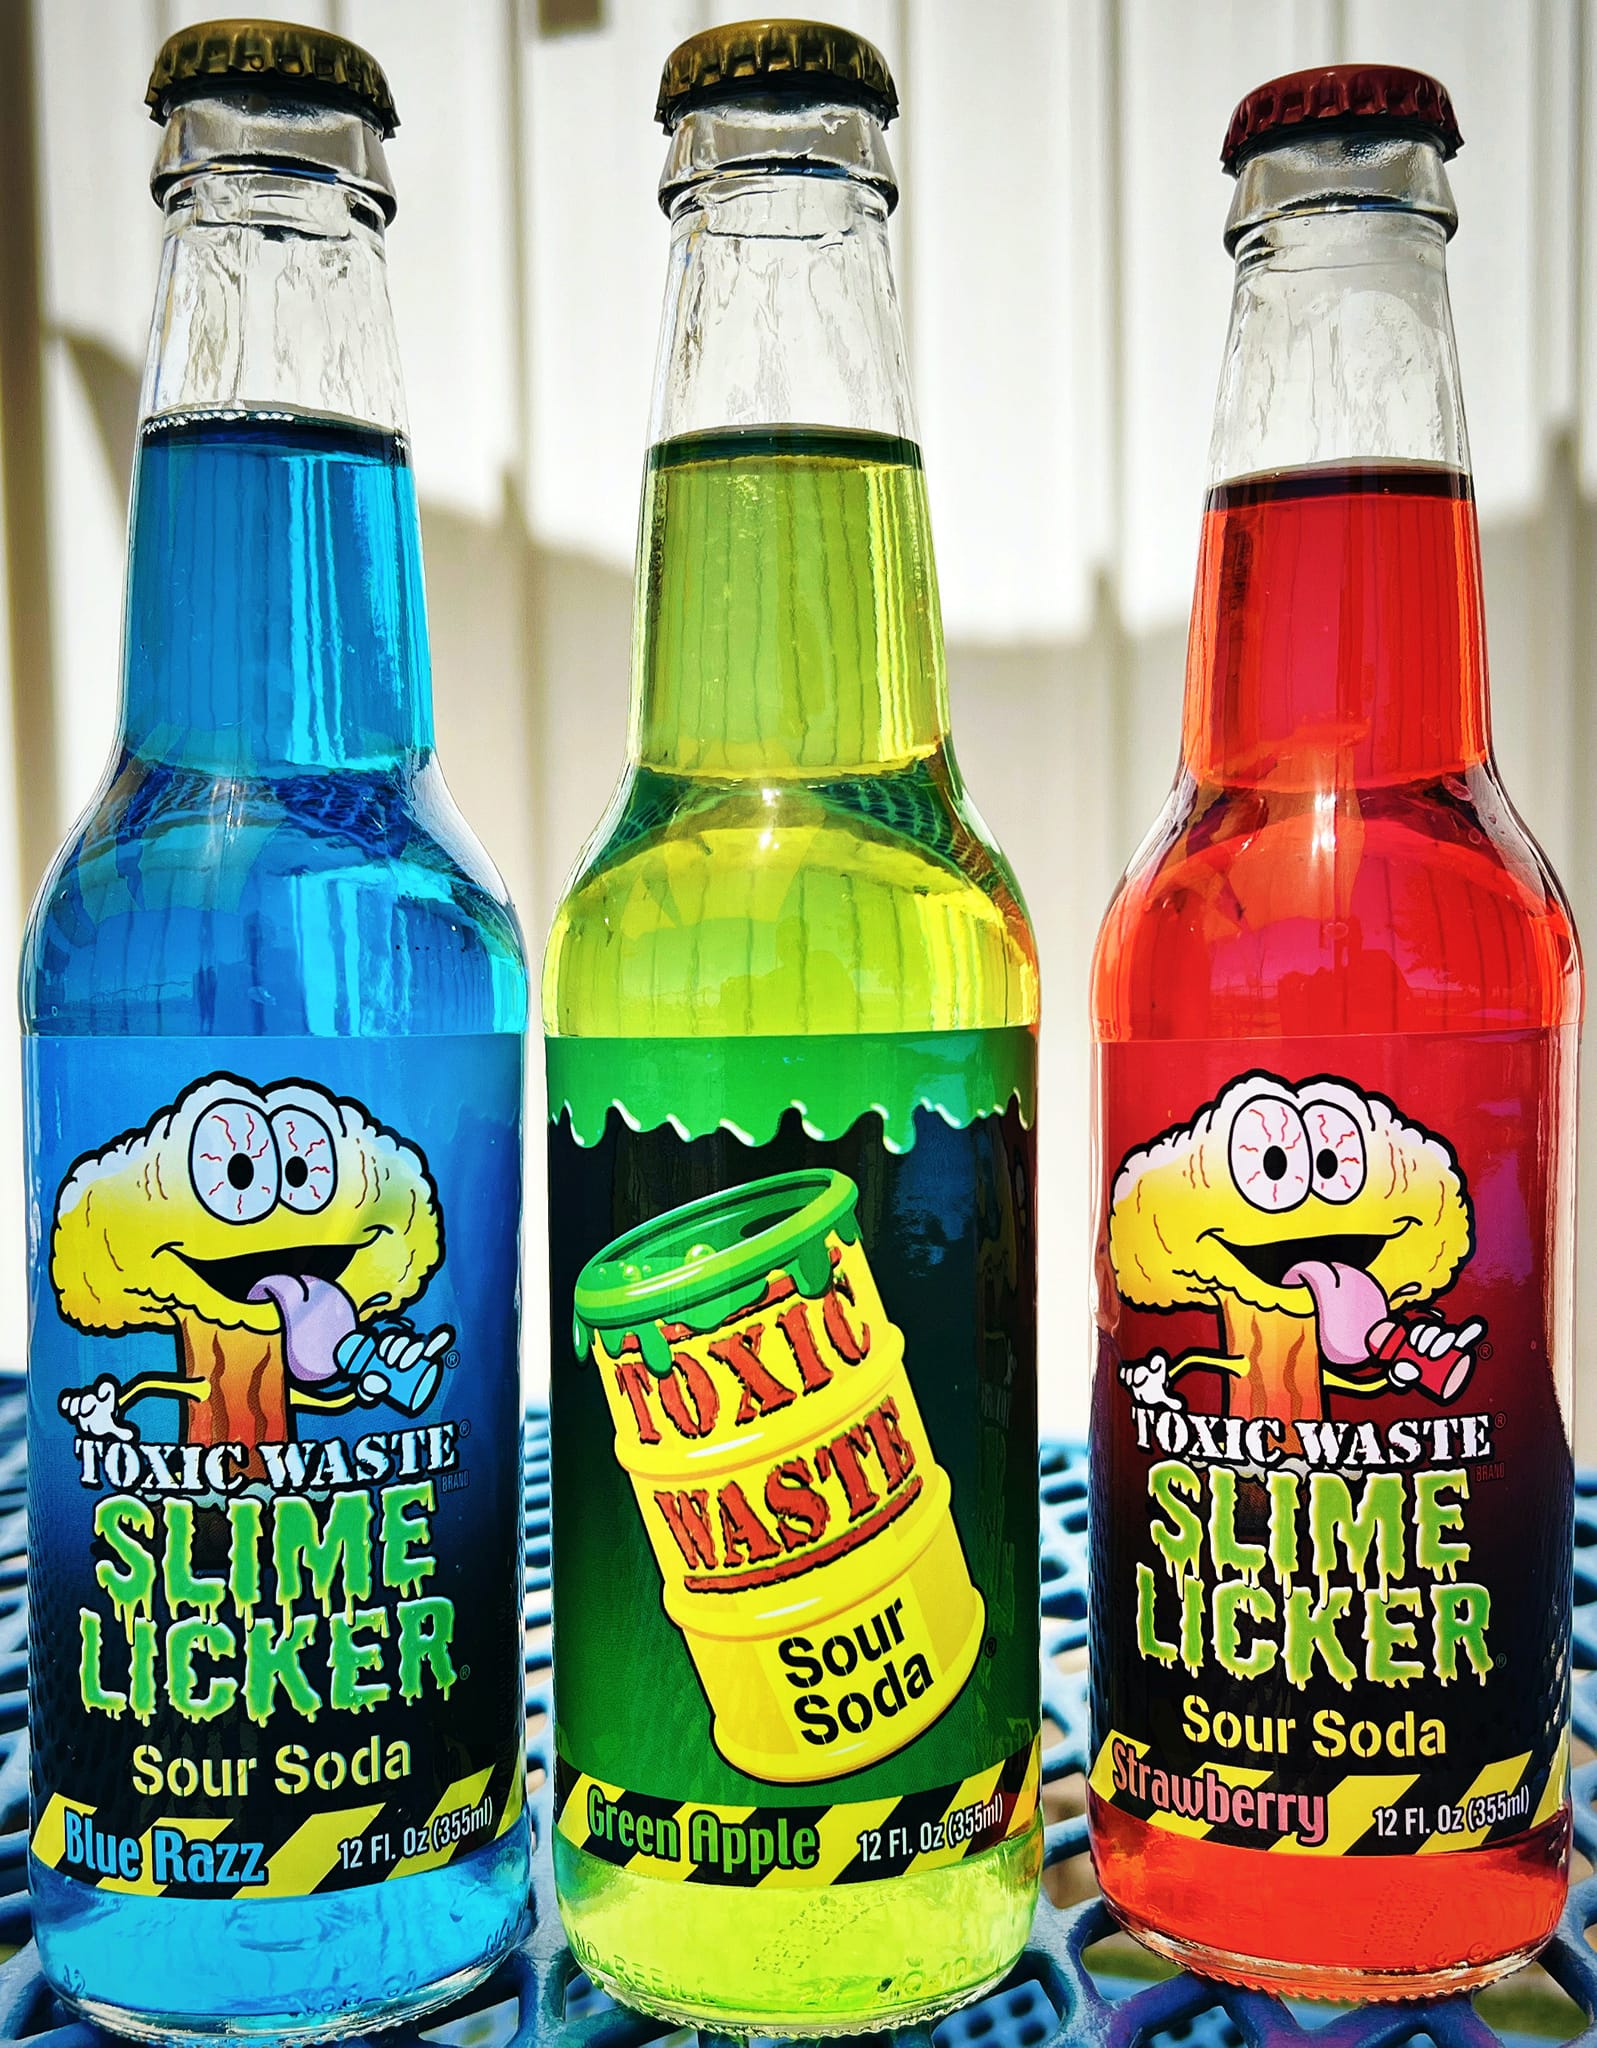 Toxic-Waste-Slime-Licker-Sour-Sodas n-2